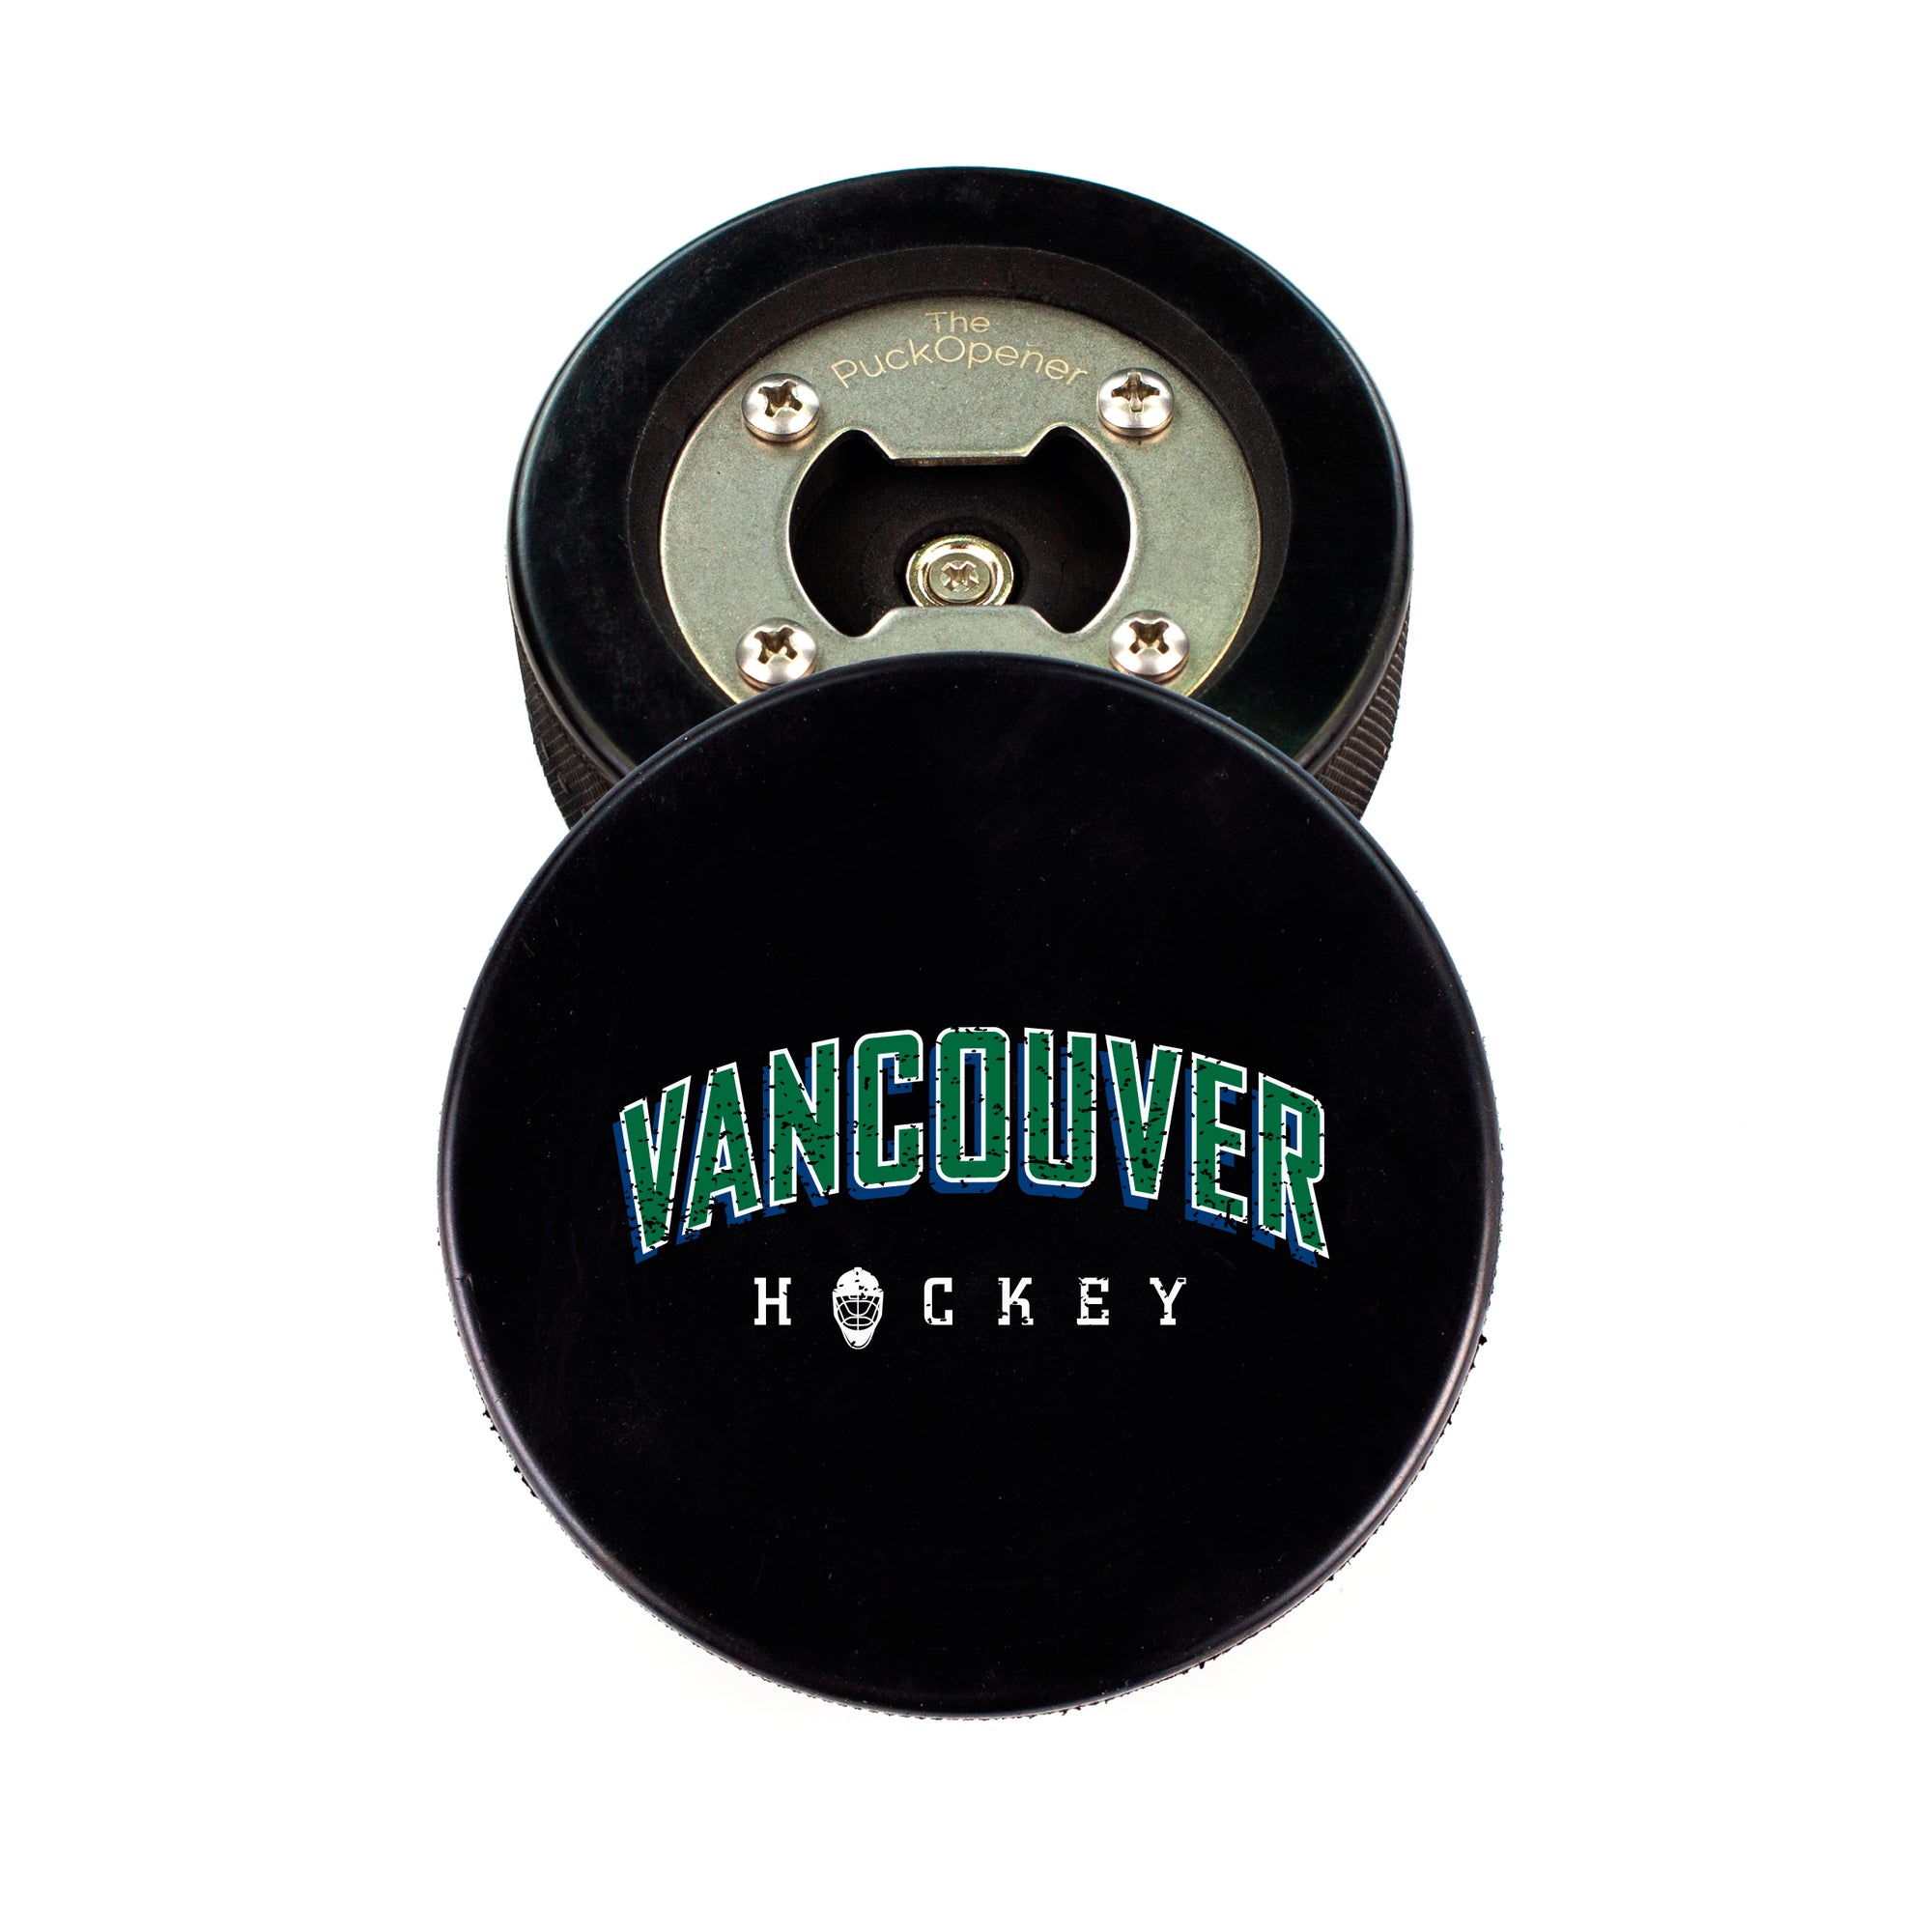 The PuckOpener Vancouver Hockey